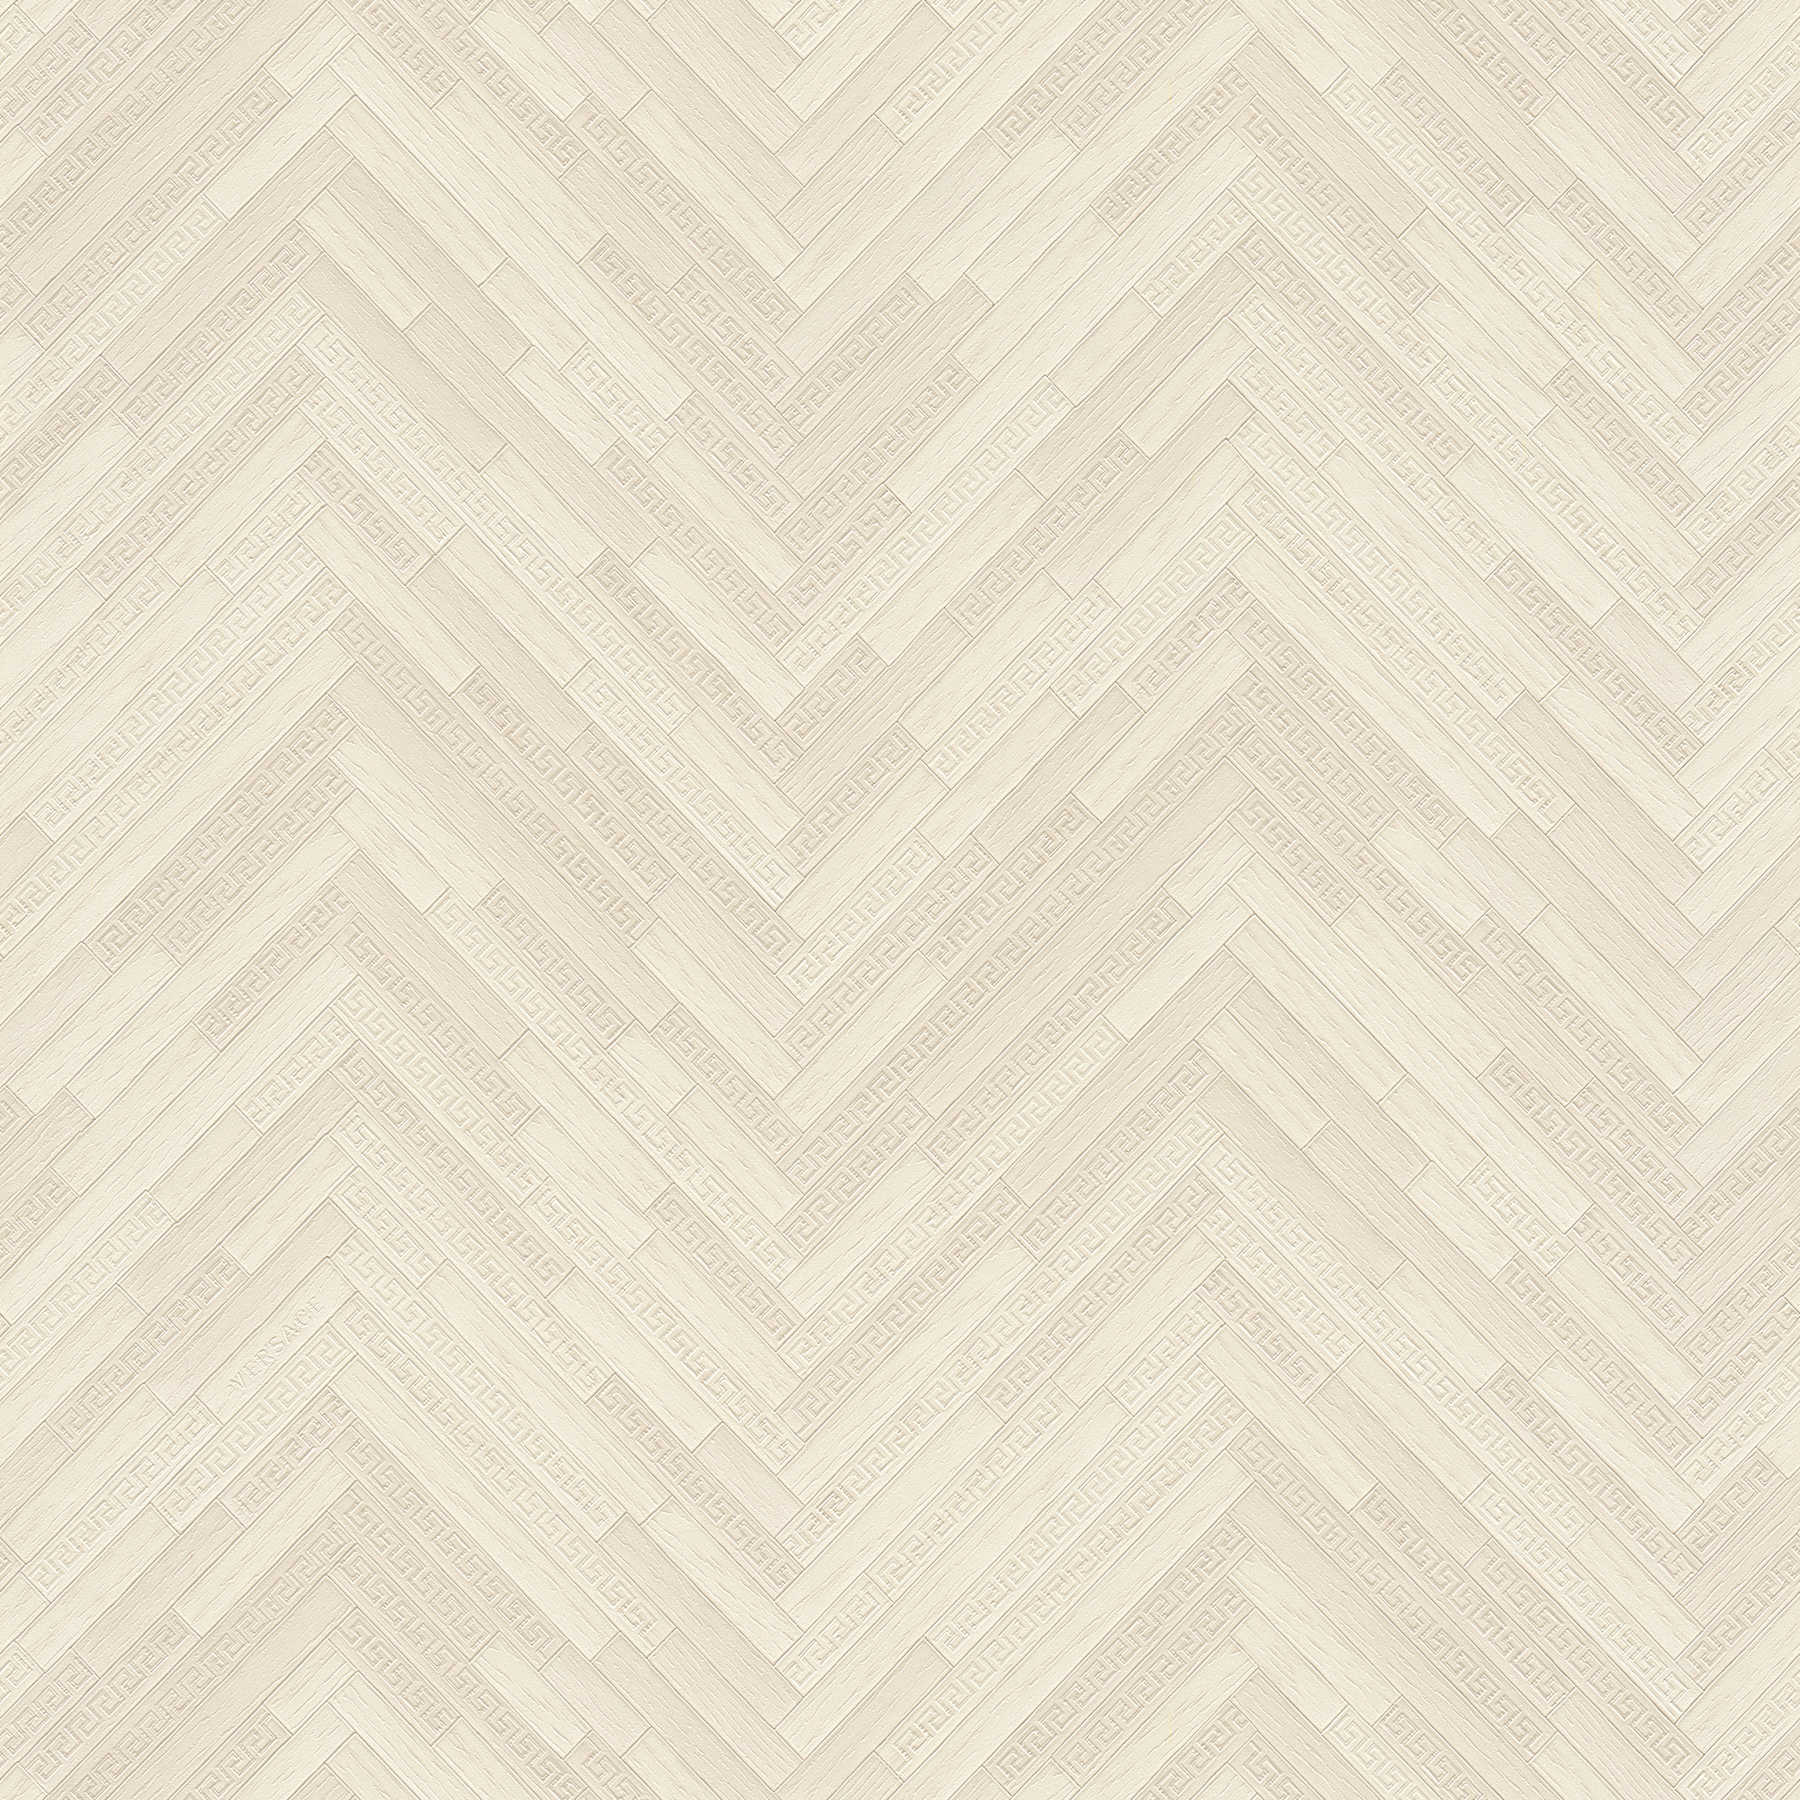 VERSACE Home wallpaper elegant wood look - cream, beige
